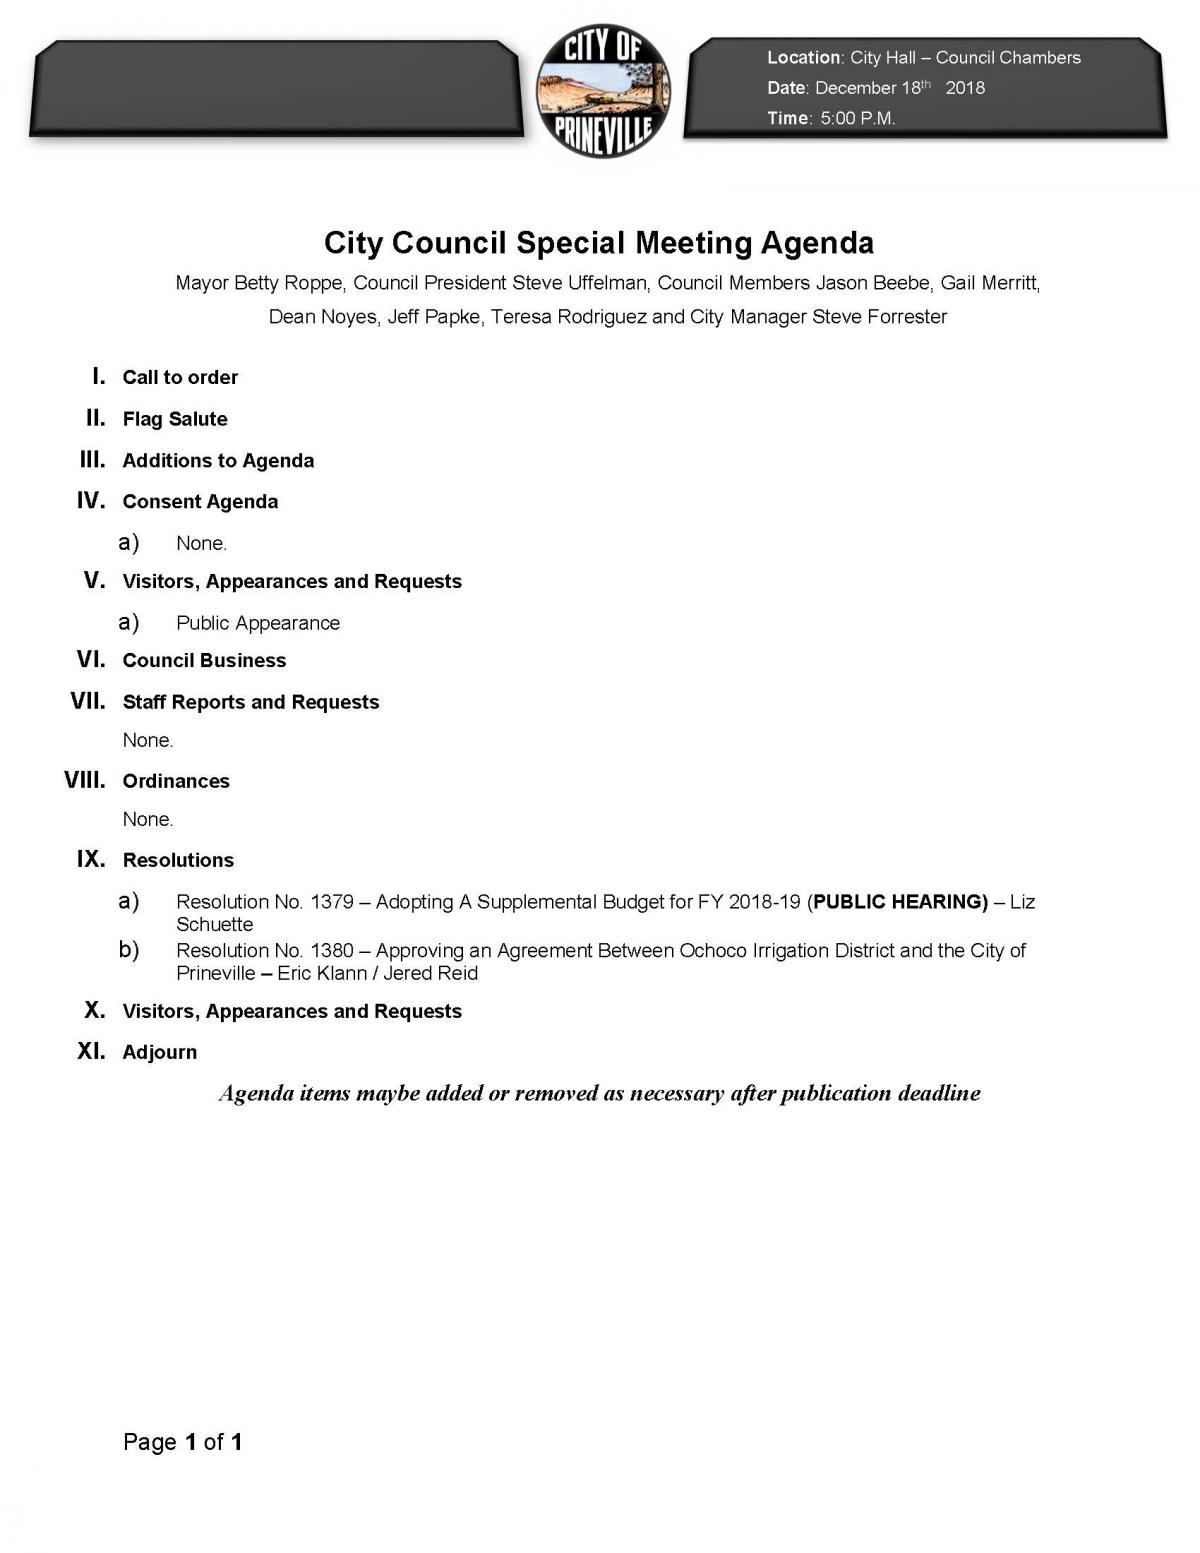 Council Agenda 12-18-18